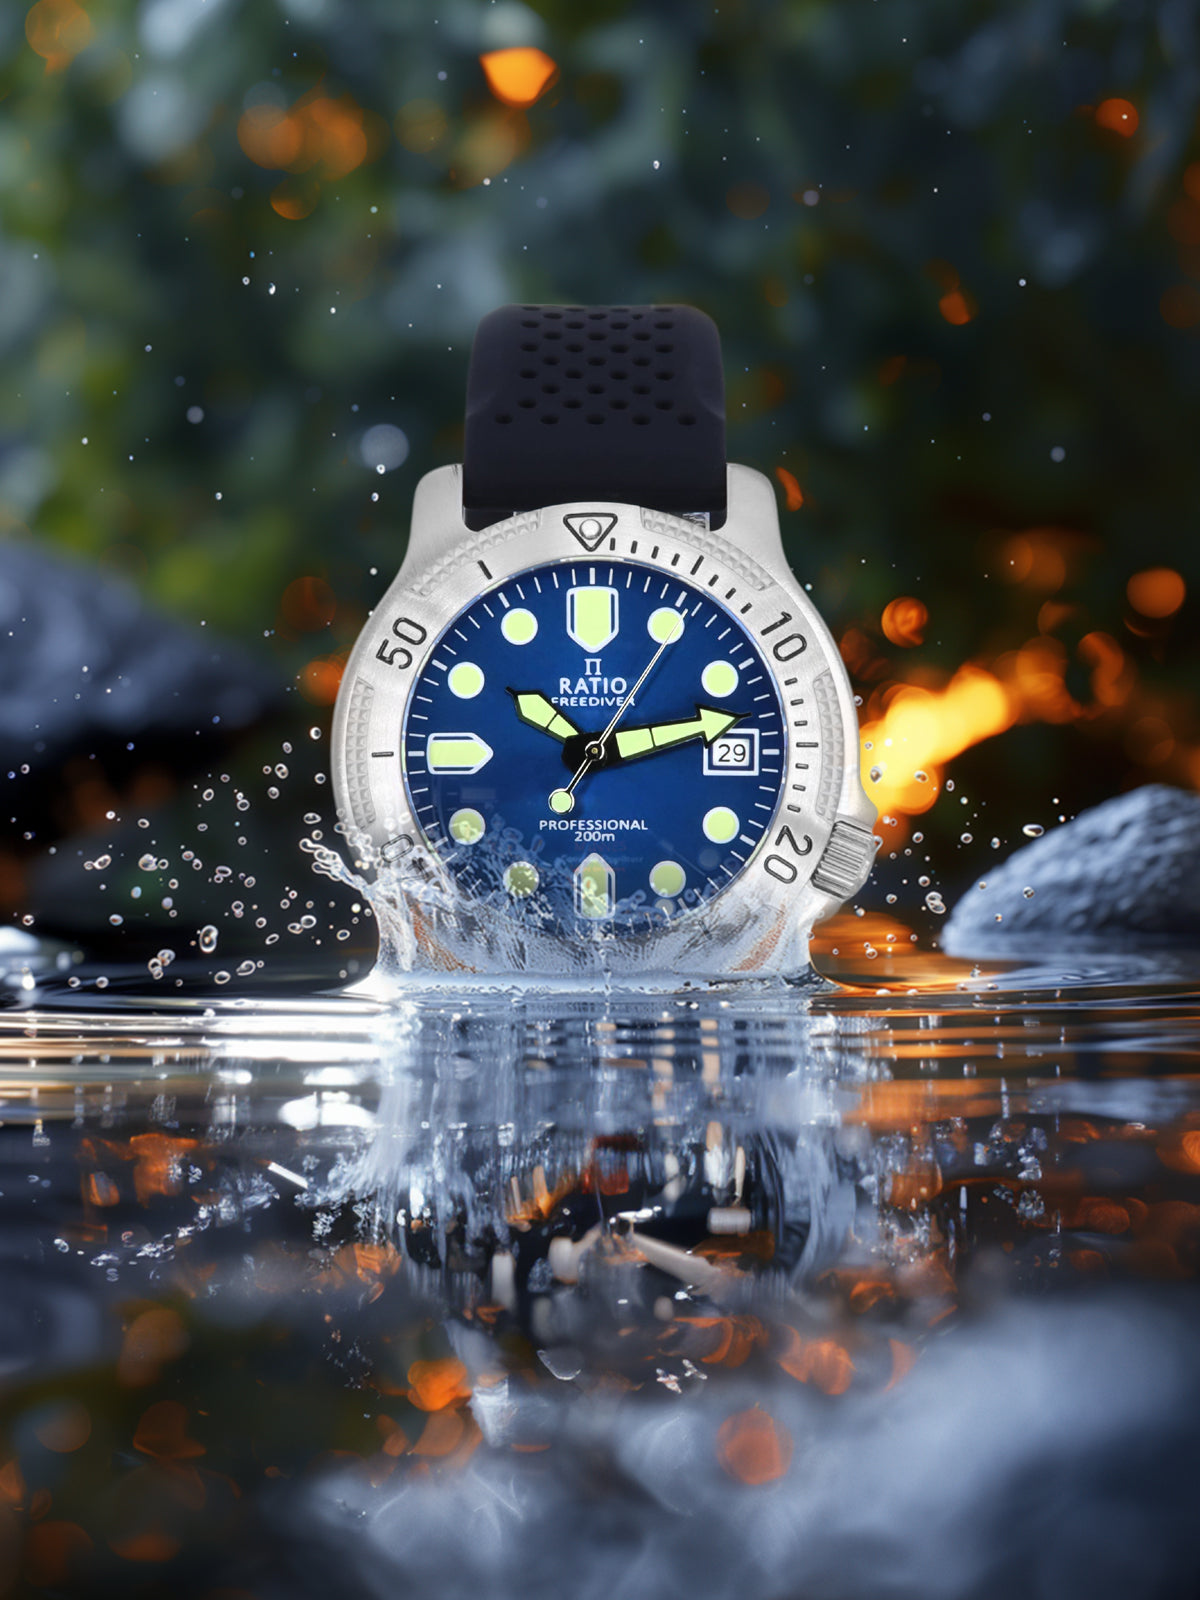 Ratio FreeDiver Professional Sapphire Blue Sunray Dial Quartz RTF023 200M Men's Watch